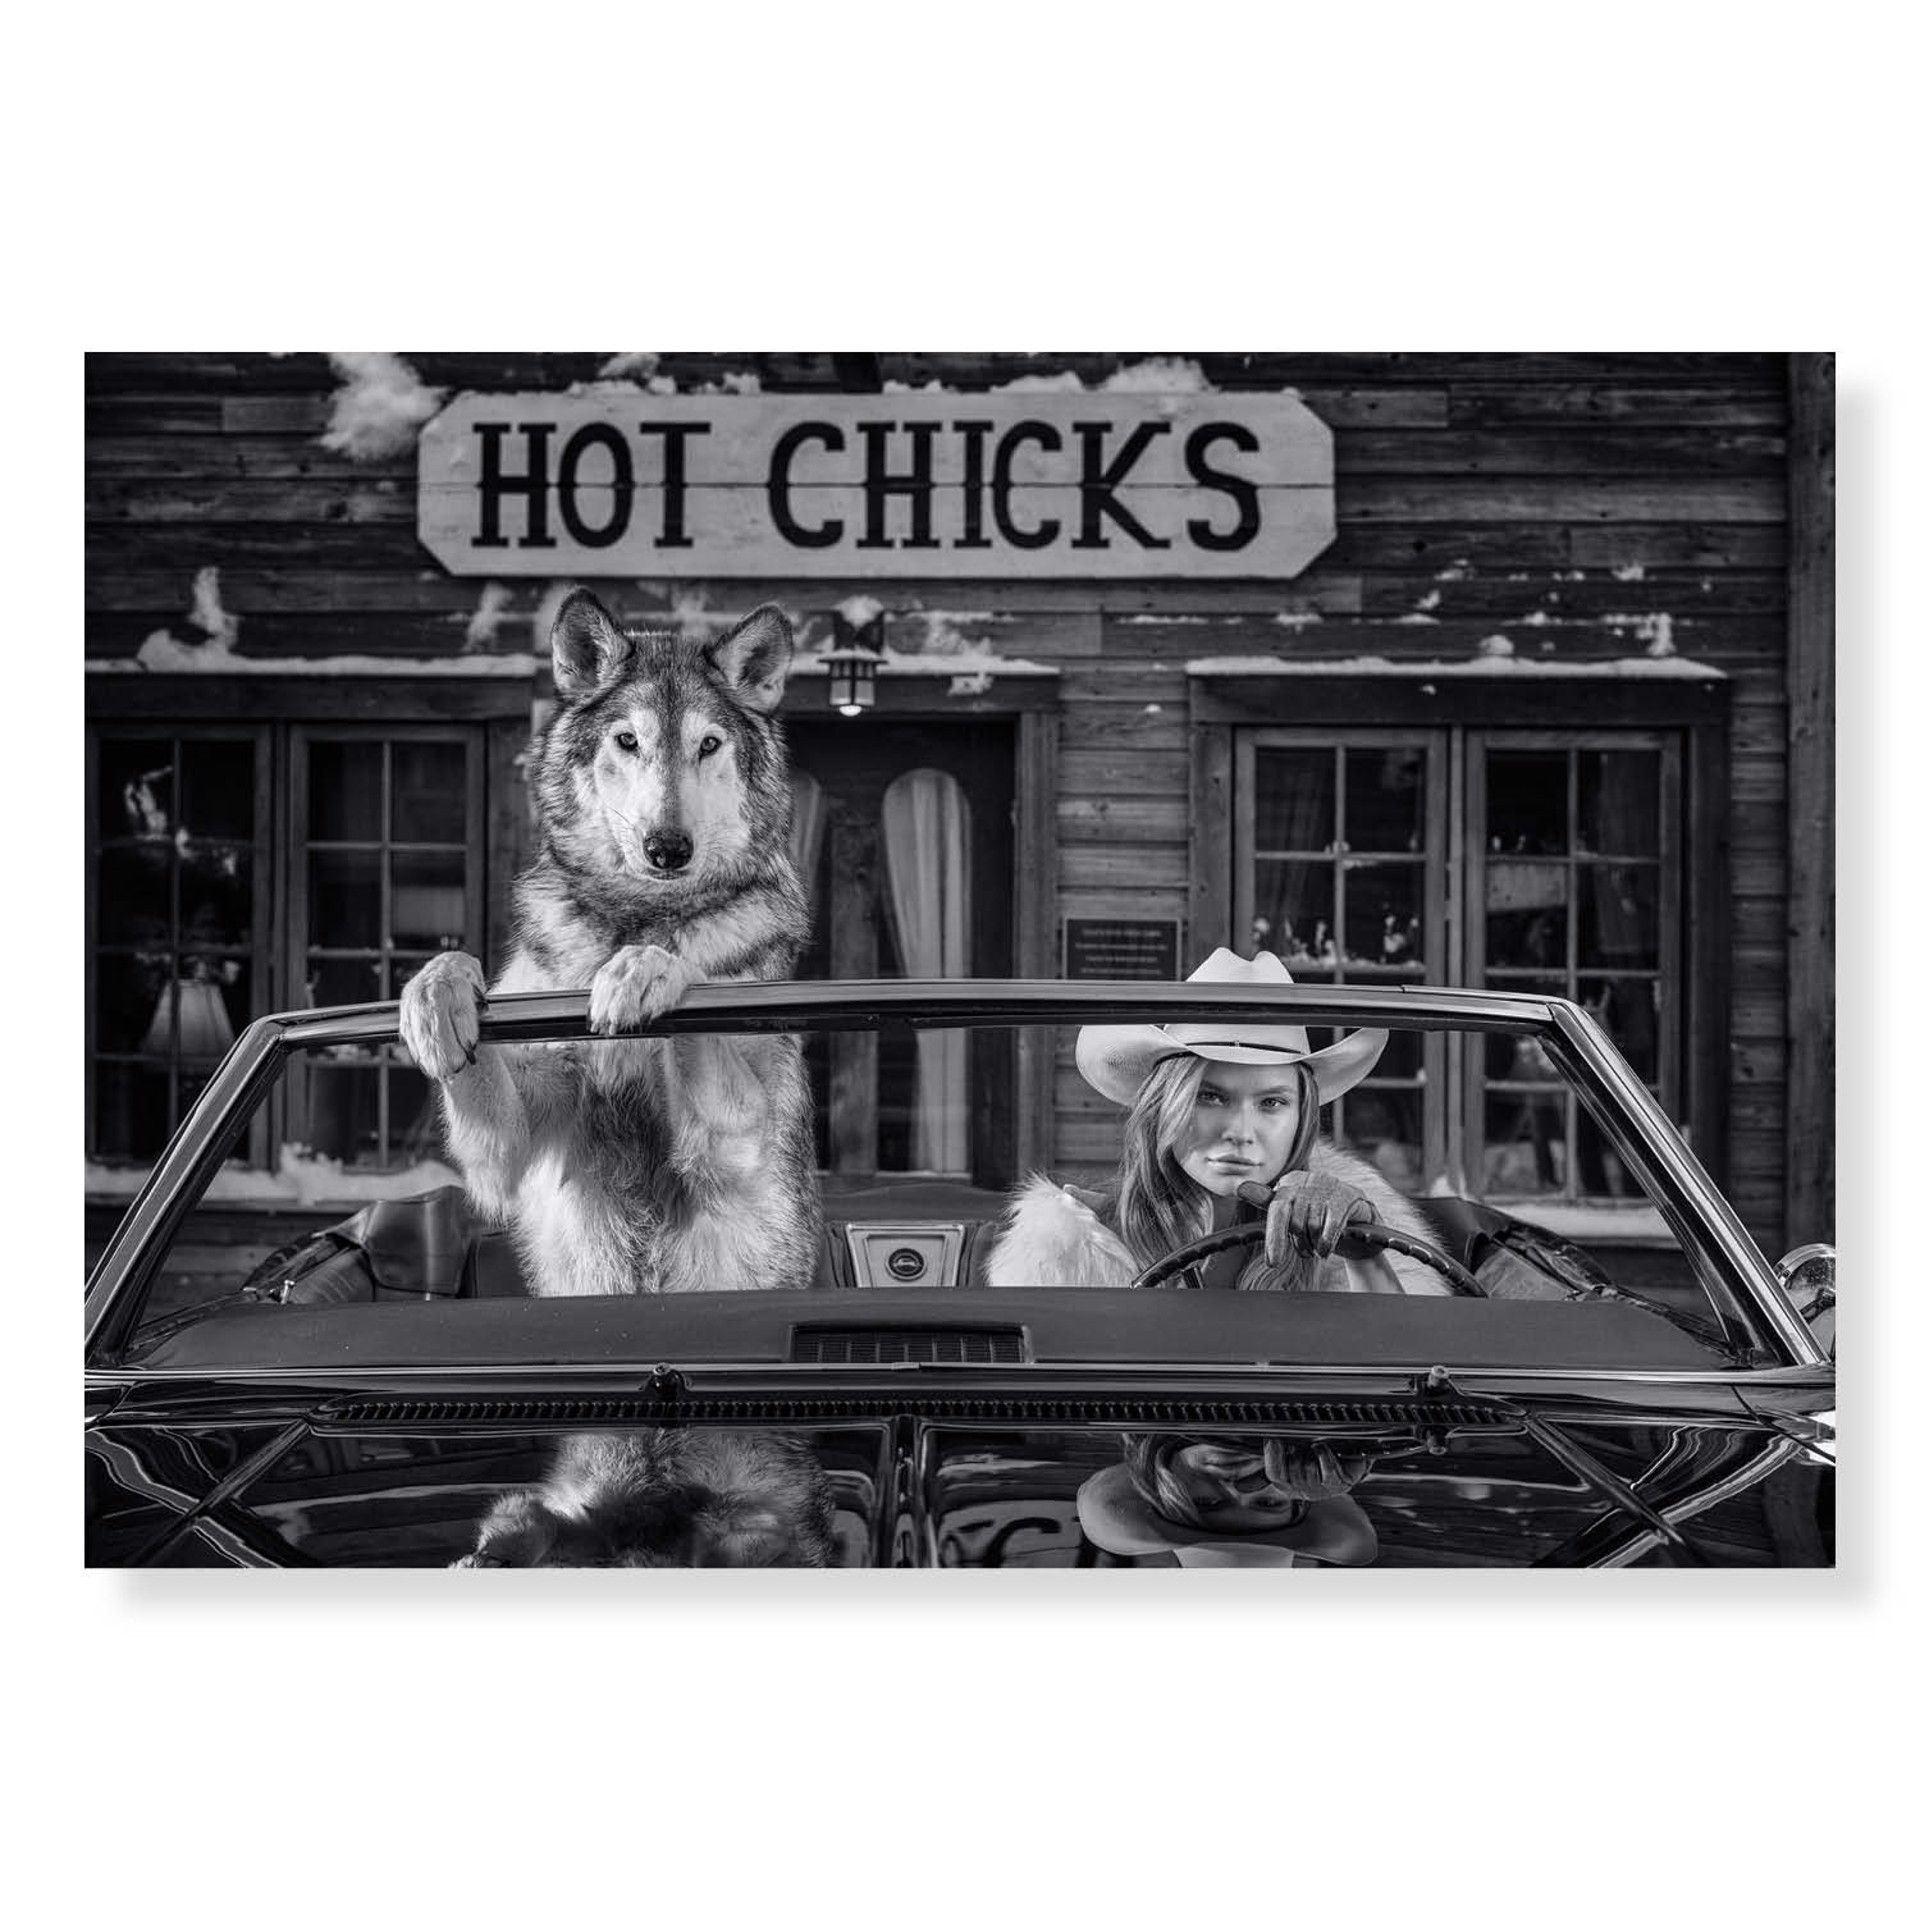 Hot Chicks by David Yarrow